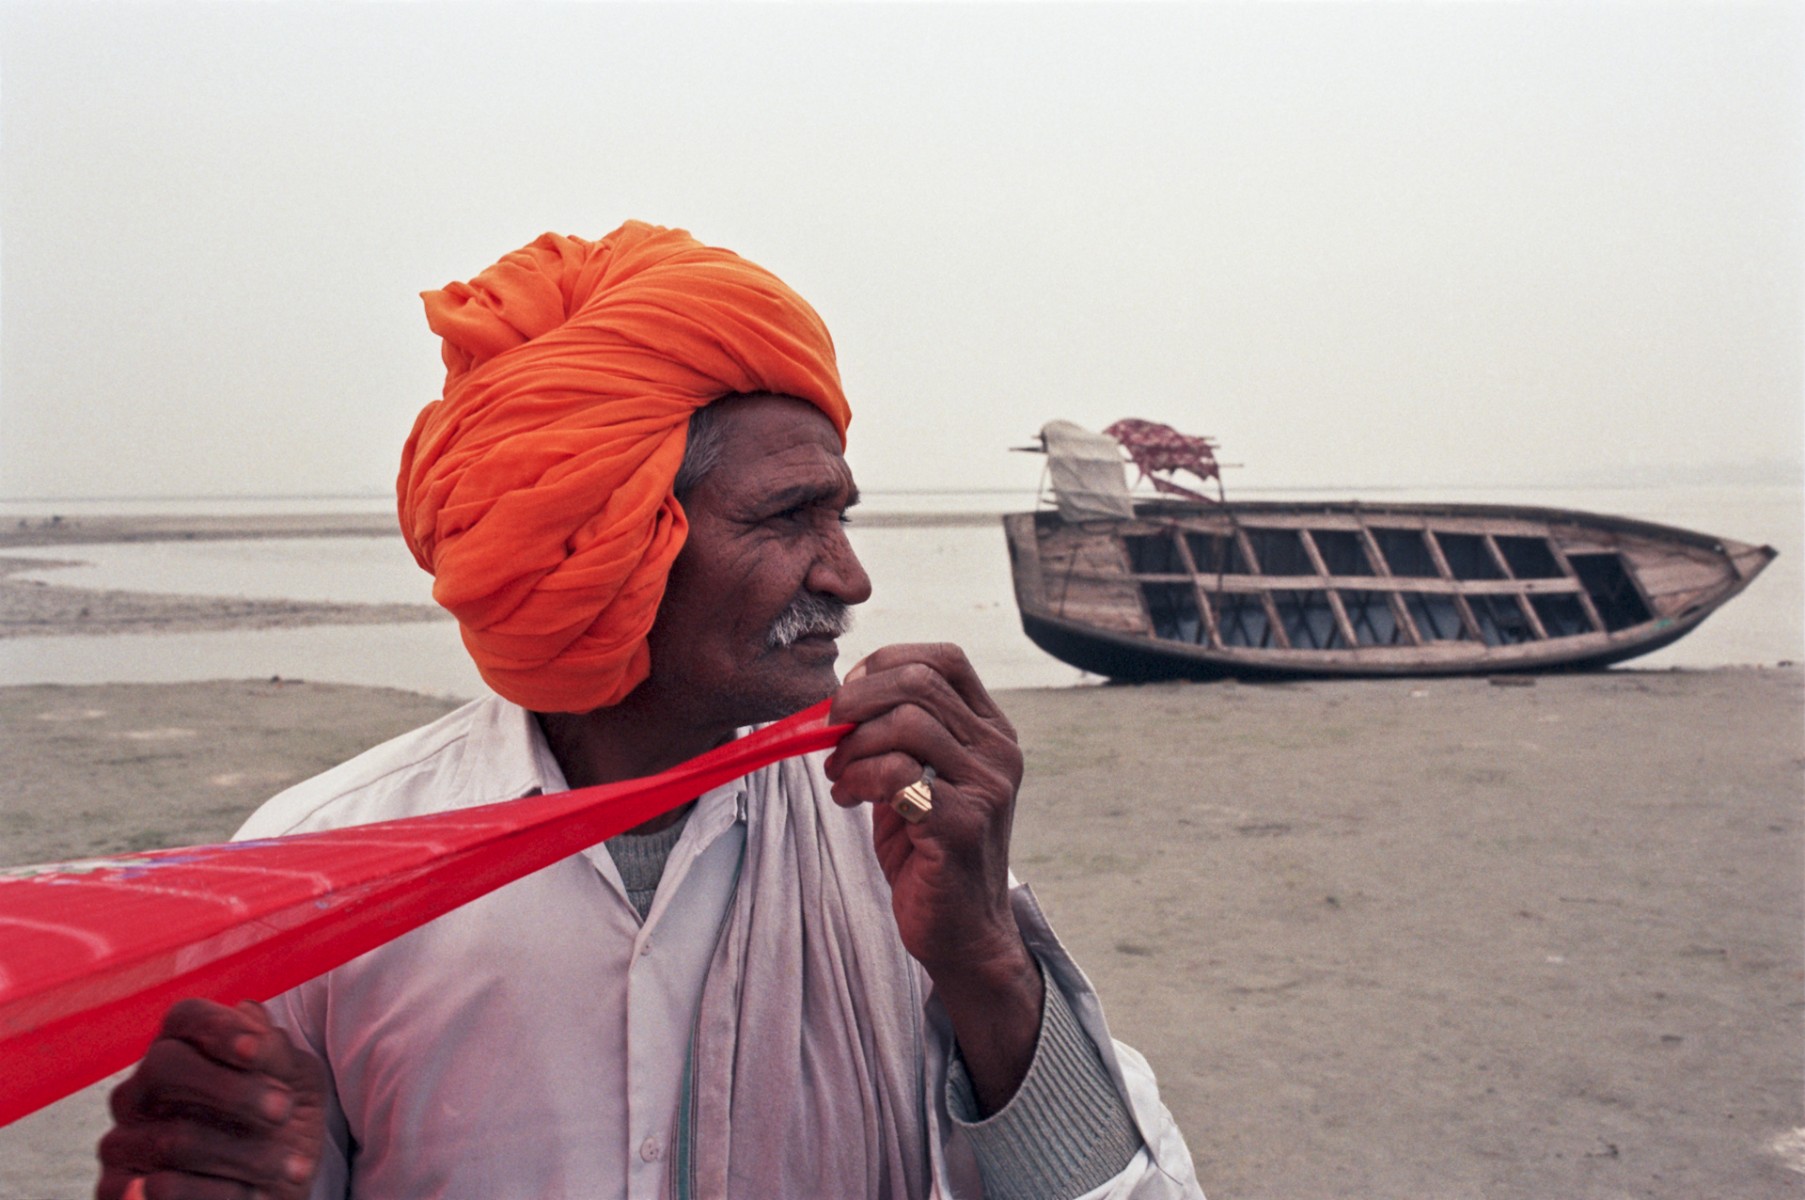 Rajasthani Pilgrim, Kumbh Mela, Allahabad